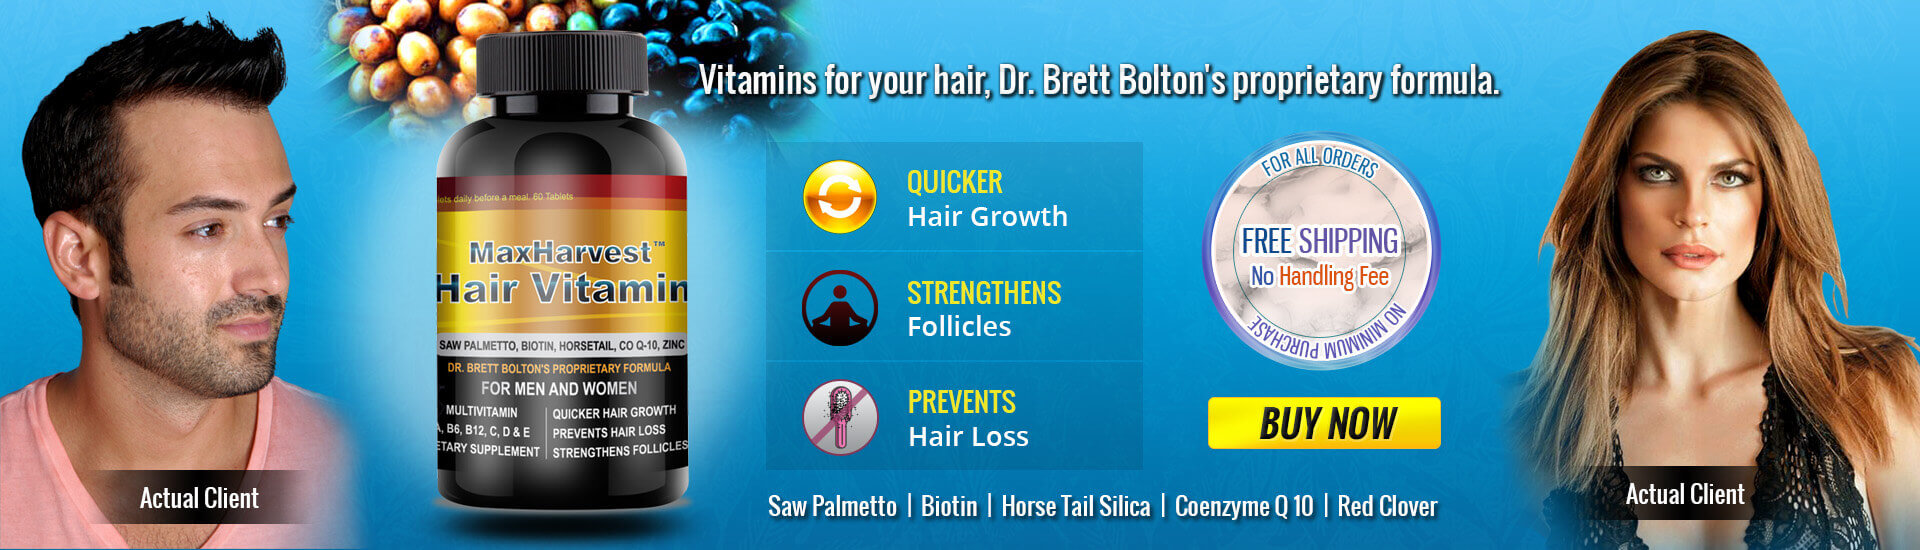 Vitamins for your hair, Dr. Brett Bolton's proprietary formula.